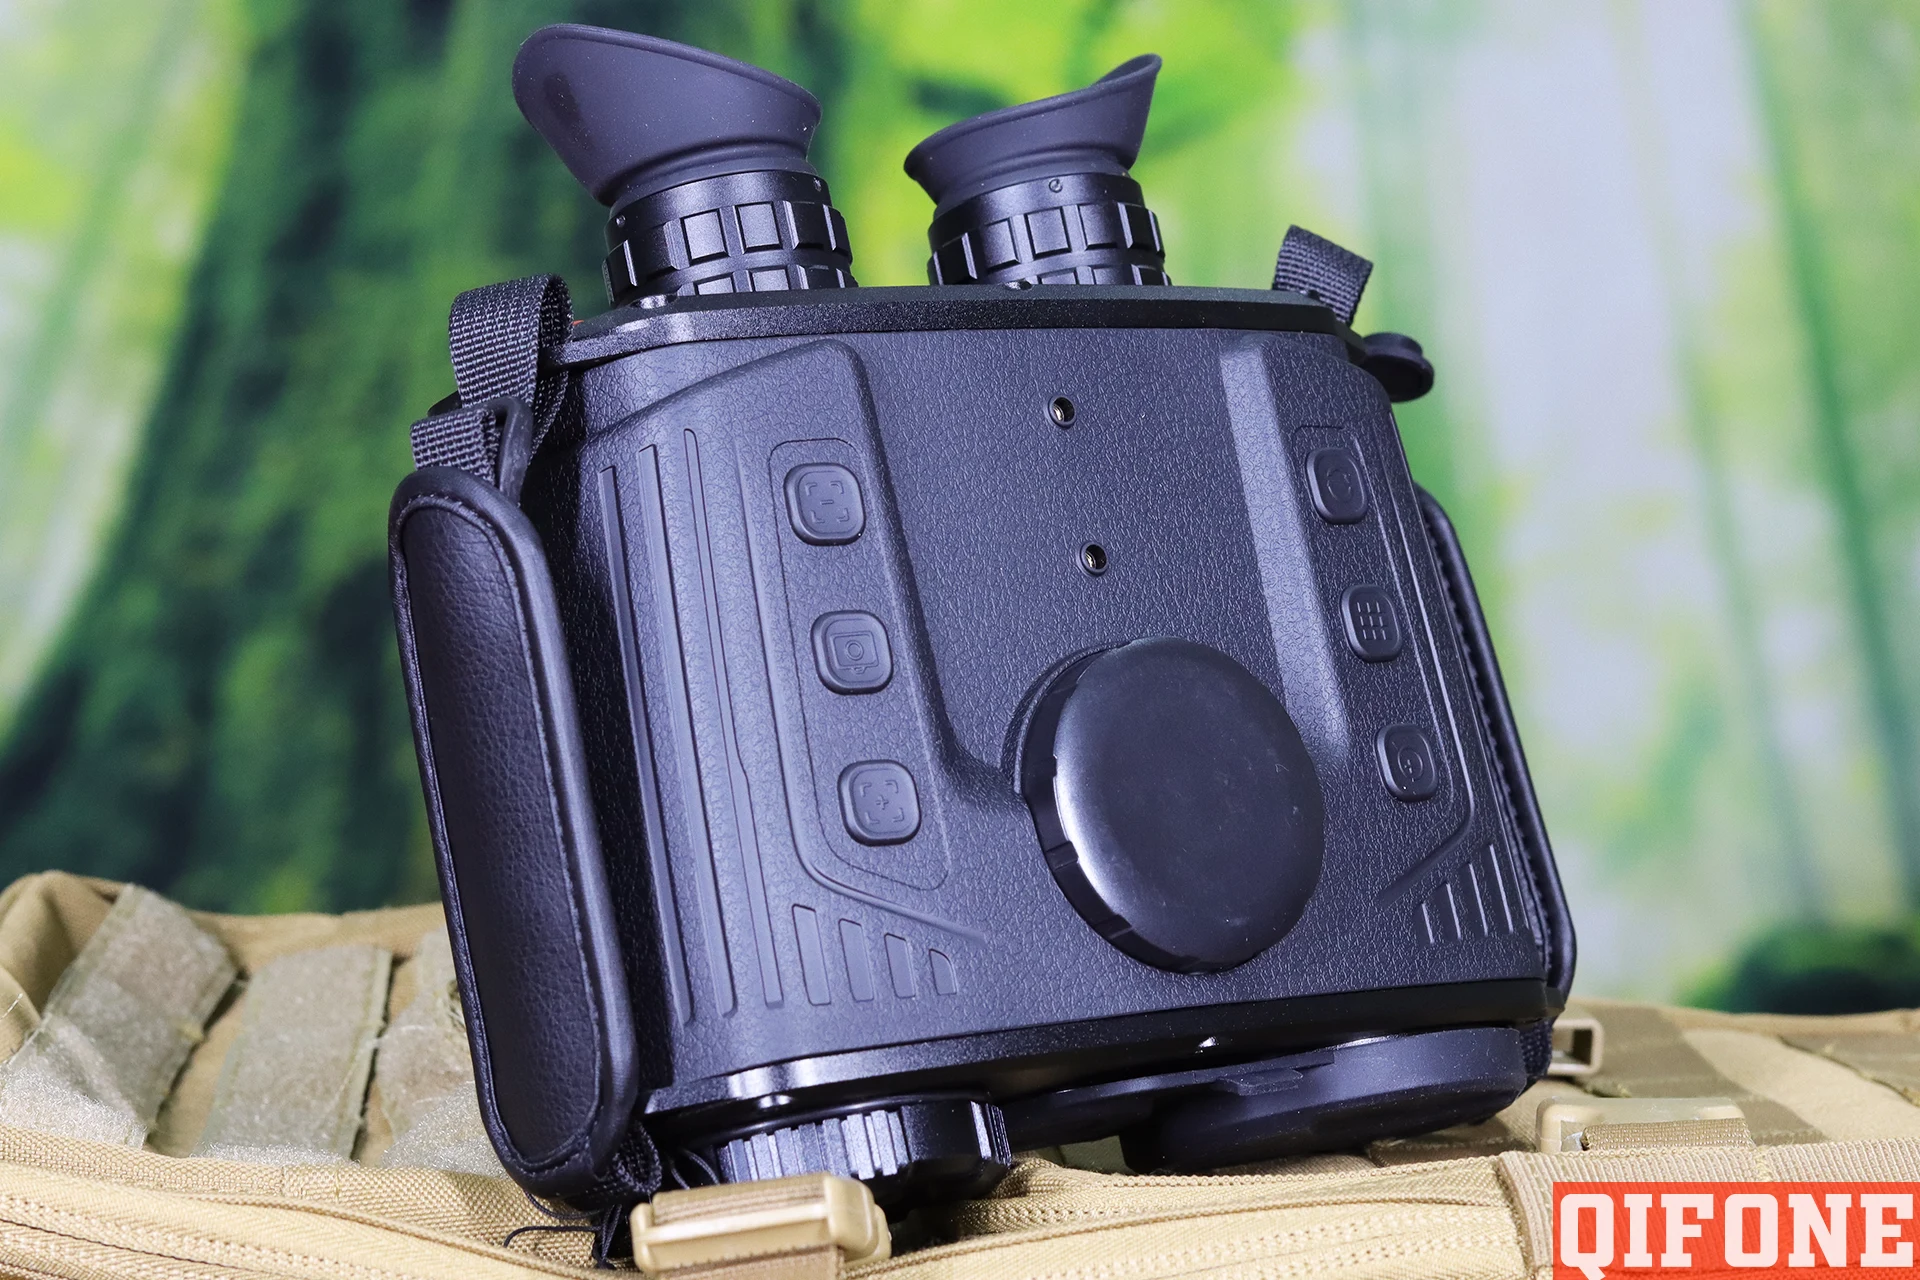 MIRIT THNV-C640 Fusion Thermal Imaging & Night Vision Binocular WIFI GPS